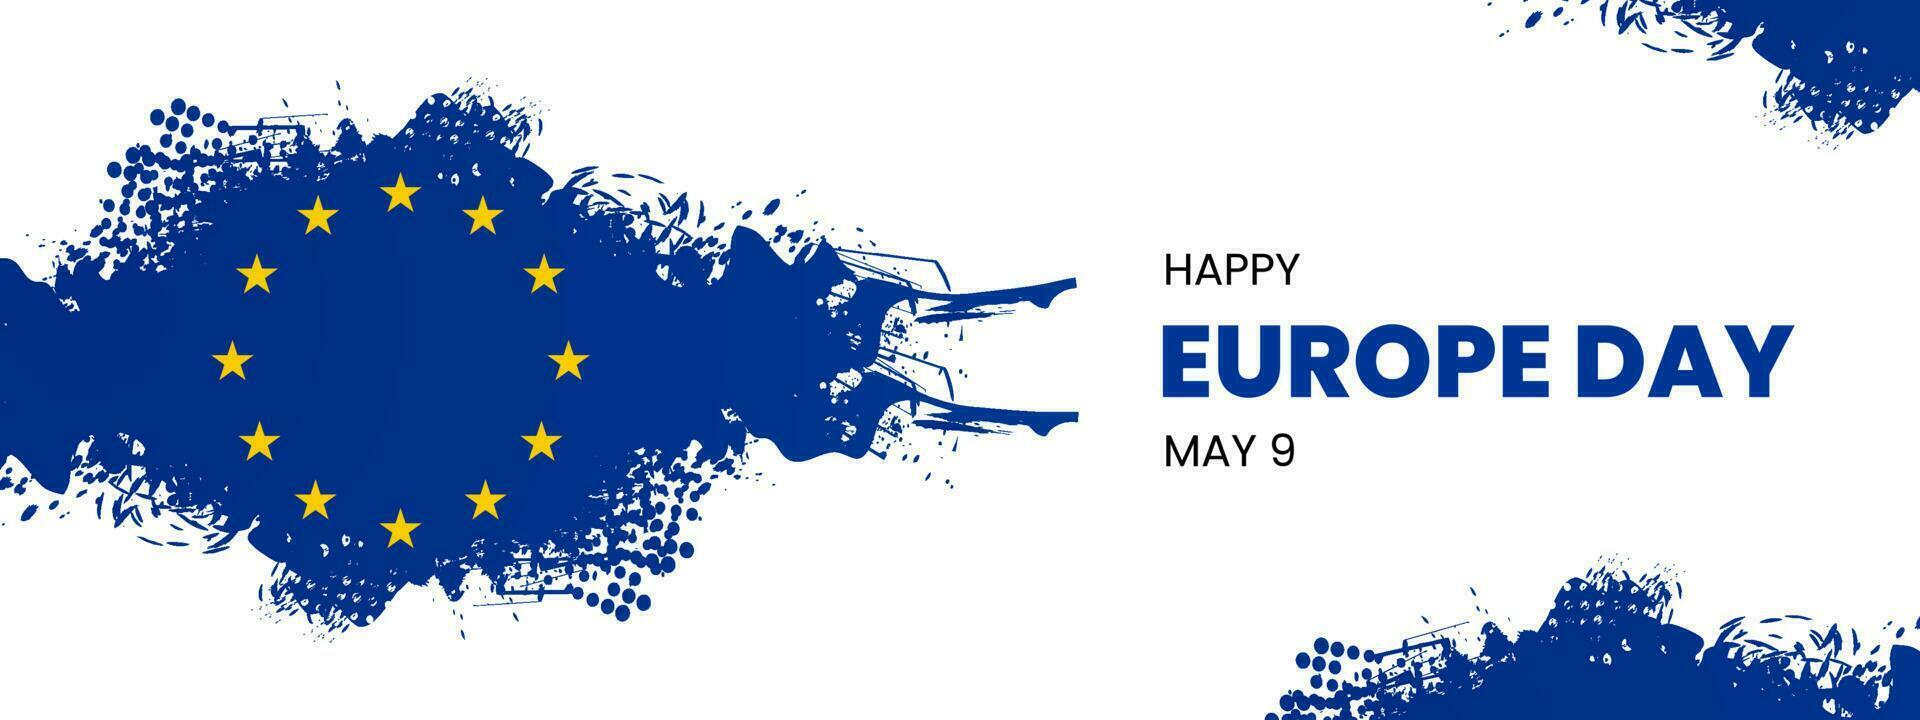 Europa día en mayo 9 9 vector ilustración. anual público fiesta en mayo. celebracion, tarjeta, póster, logo, palabras, texto escrito en azul pintado fondo victoria en Europa día.